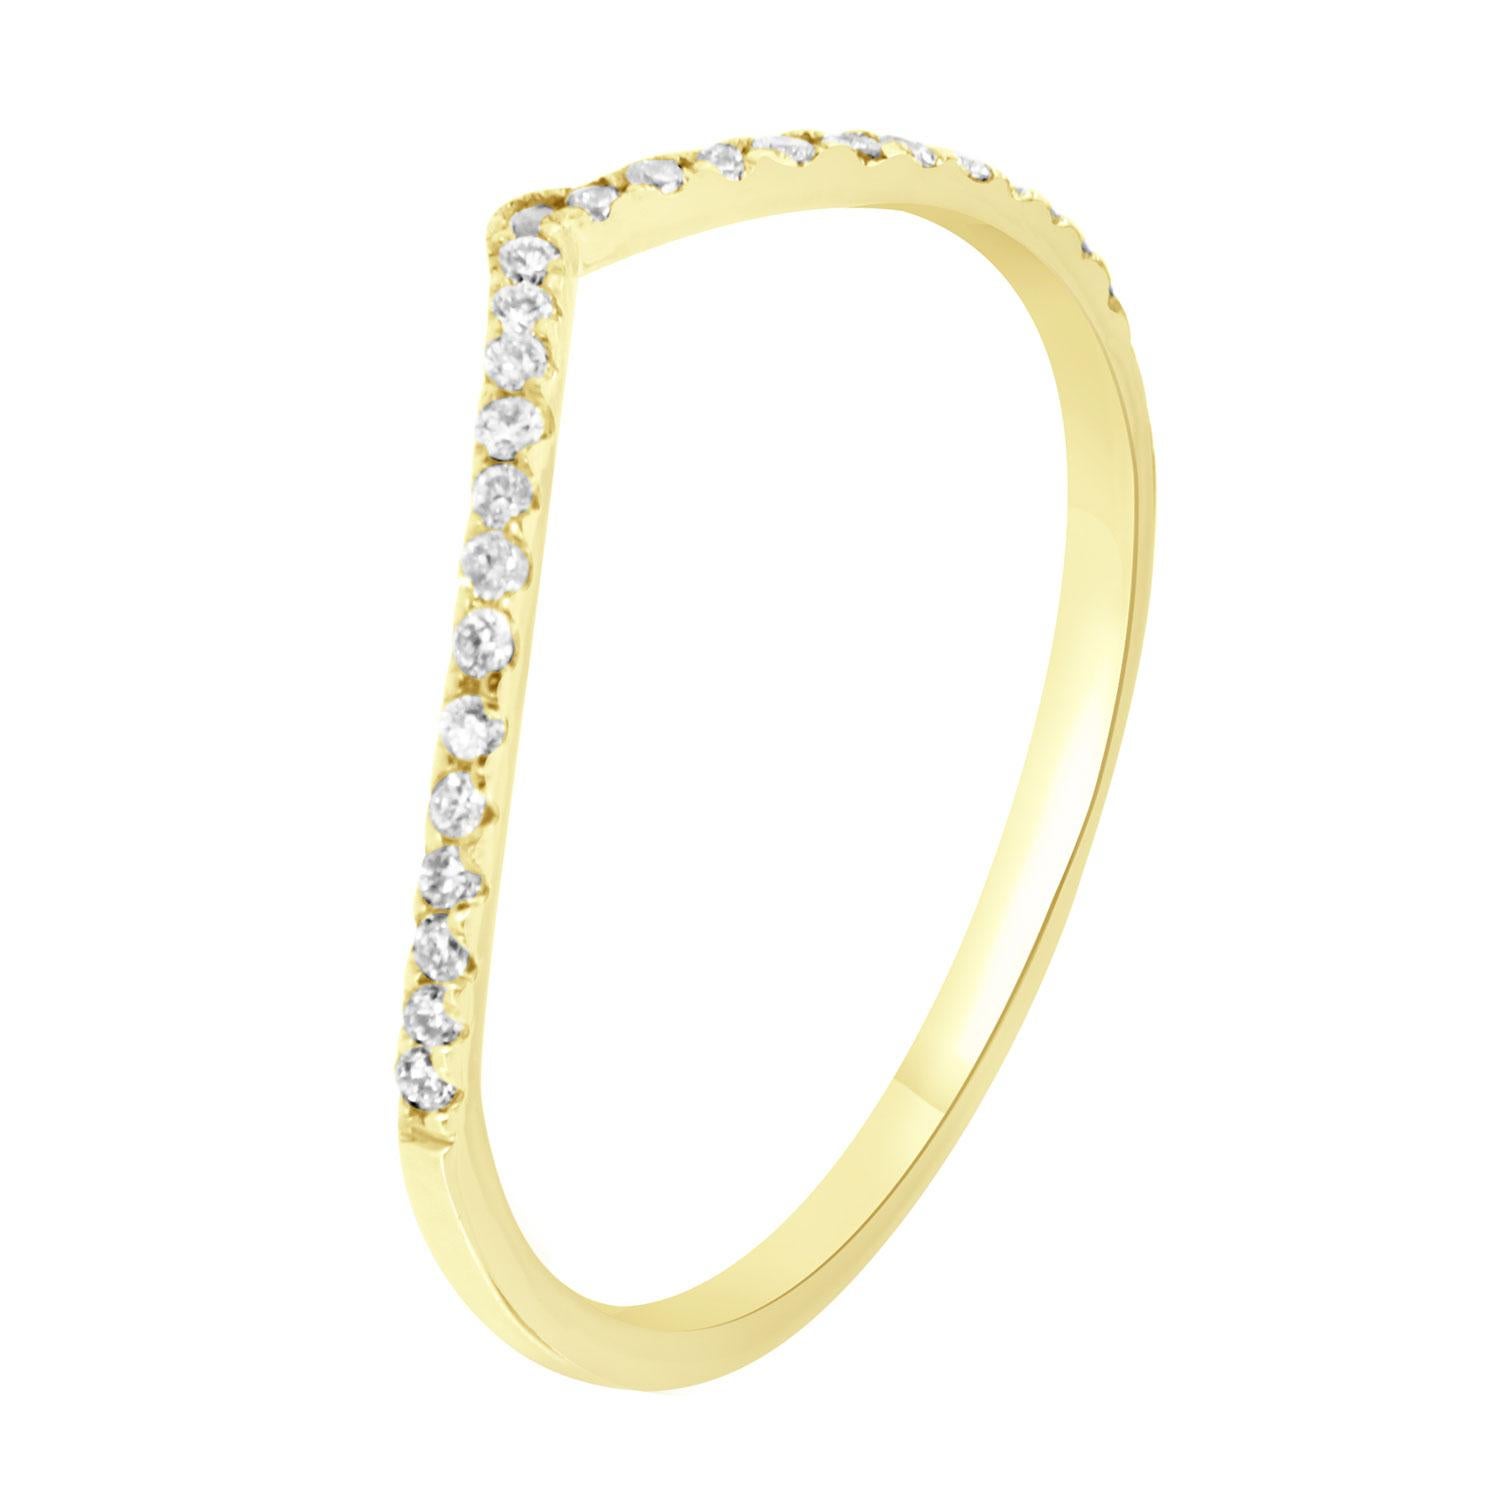 14k Yellow Gold 1.16 Carat Kite Champagne Sapphire Halo Diamond Ring Set For Sale 1